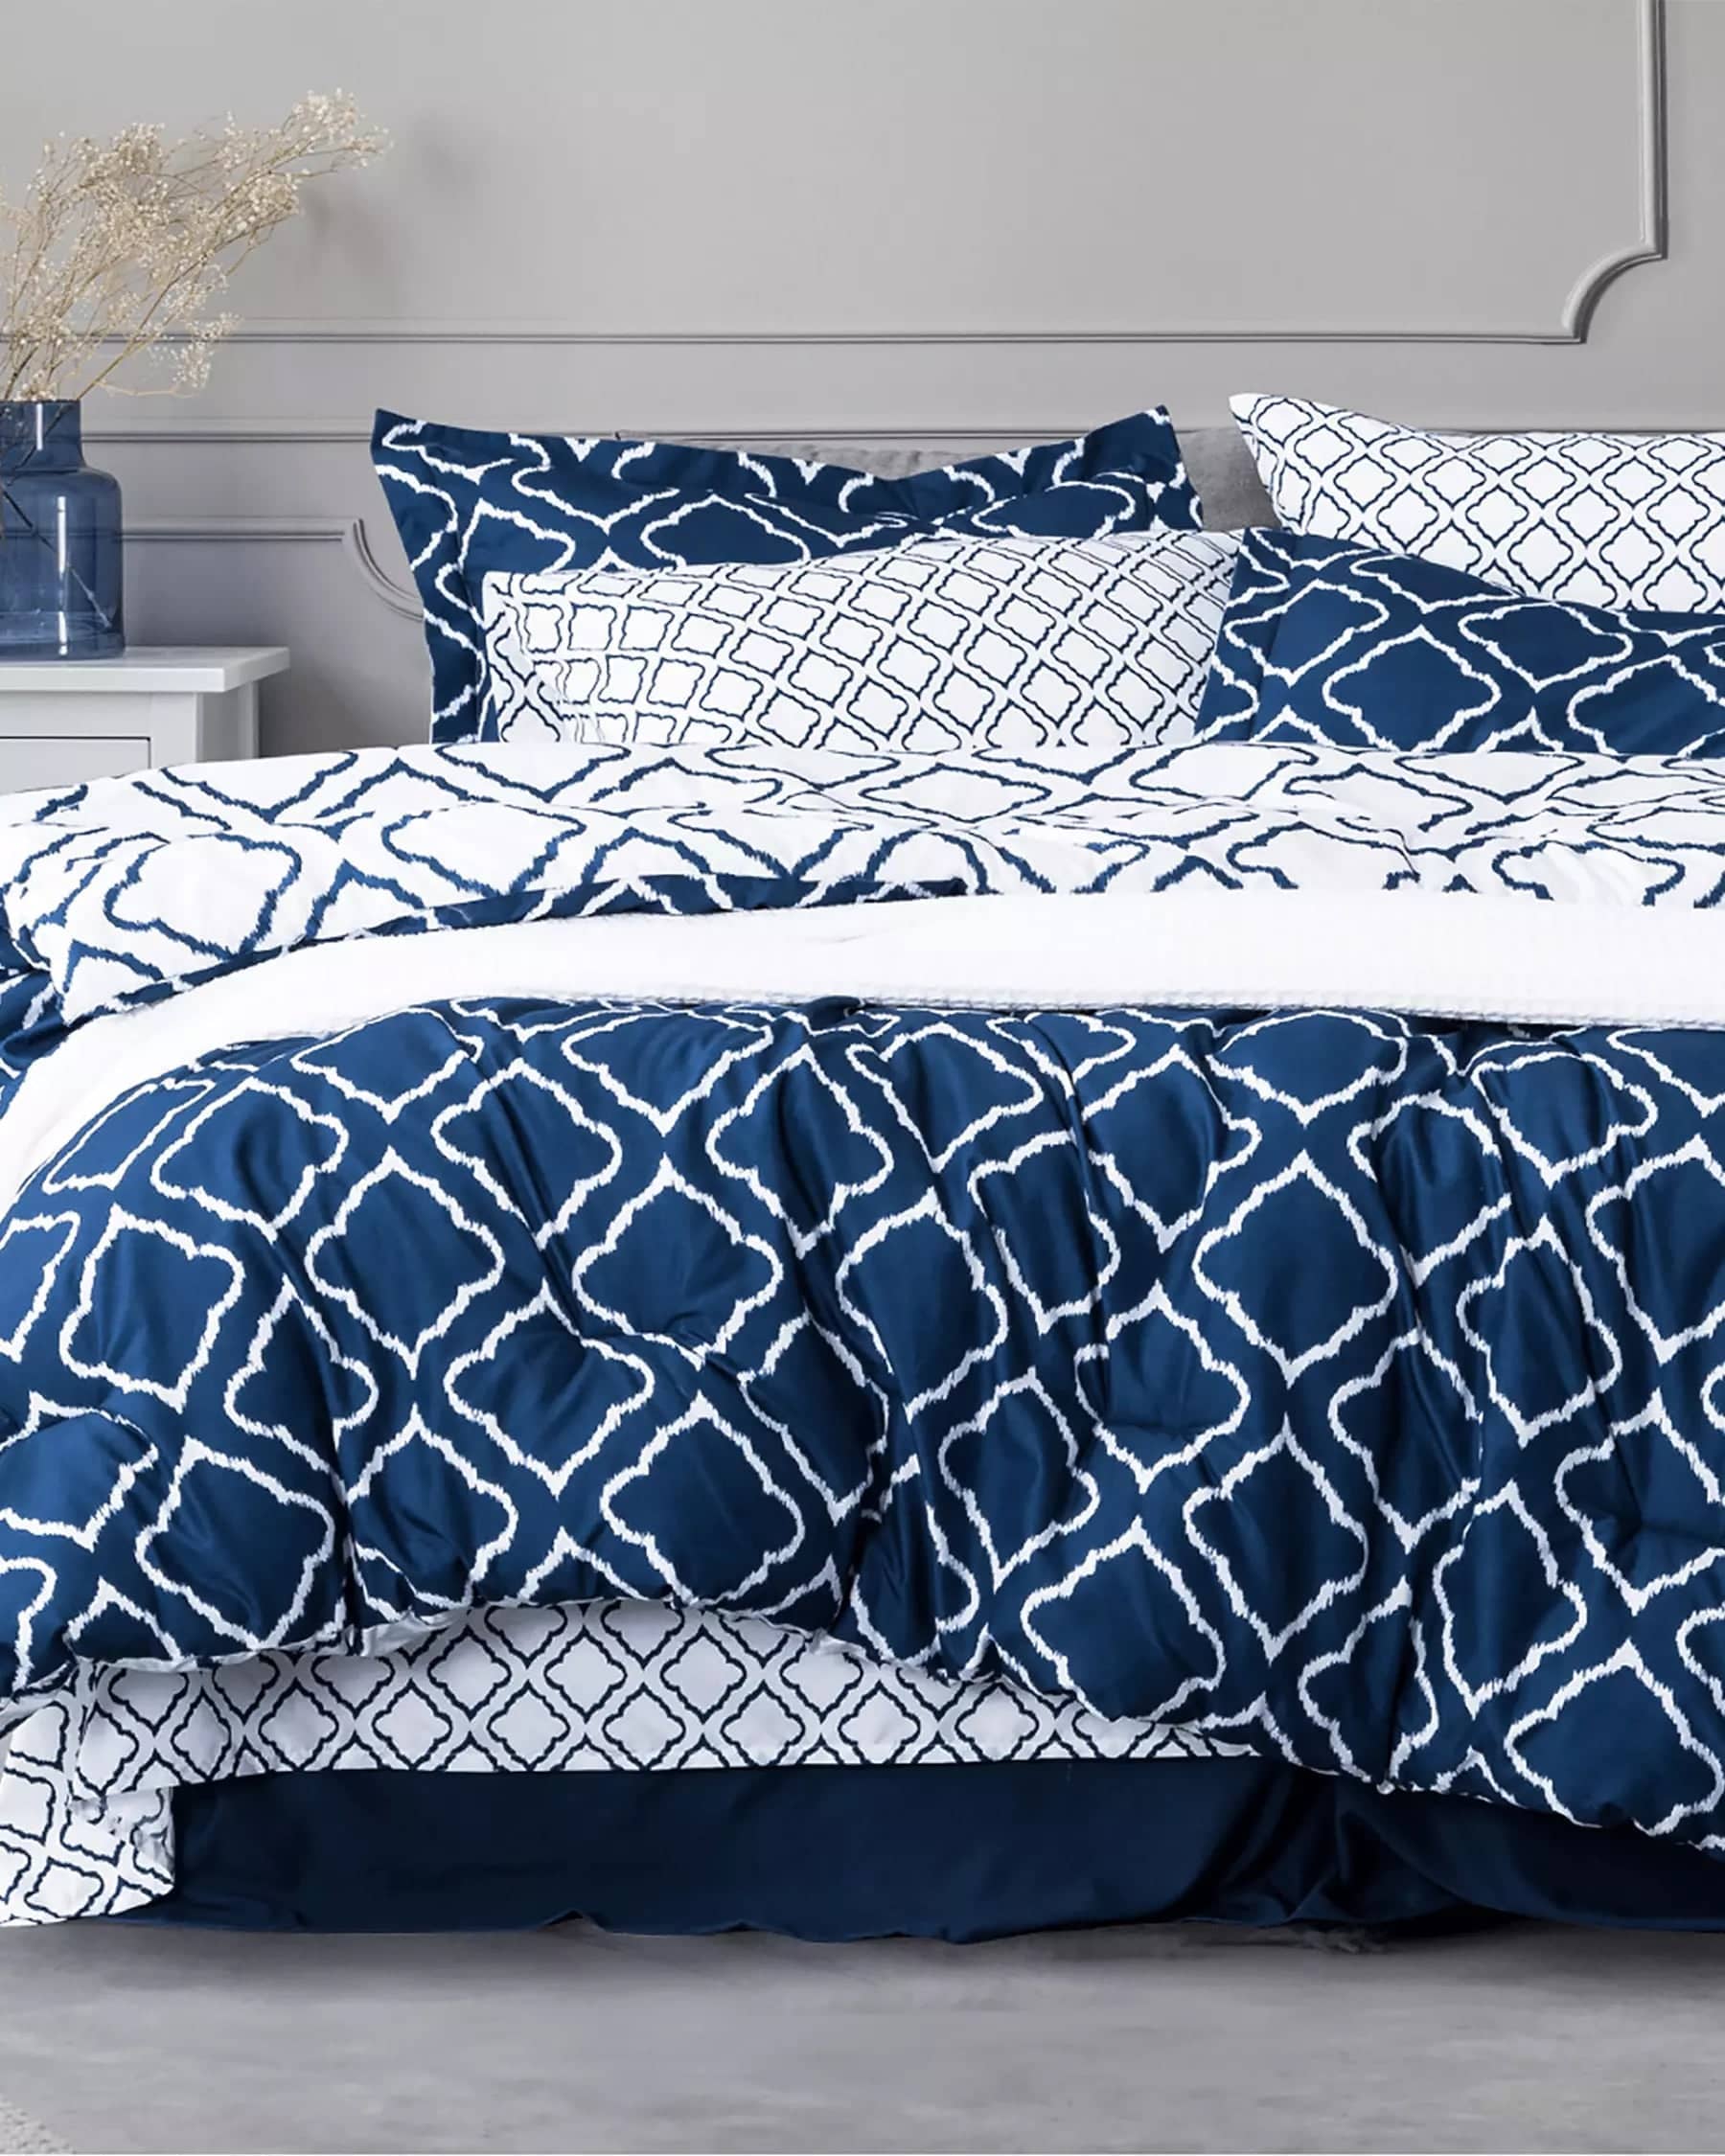 Split King 5-Piece Bed Sheet Set - Denim, 100% Microfiber